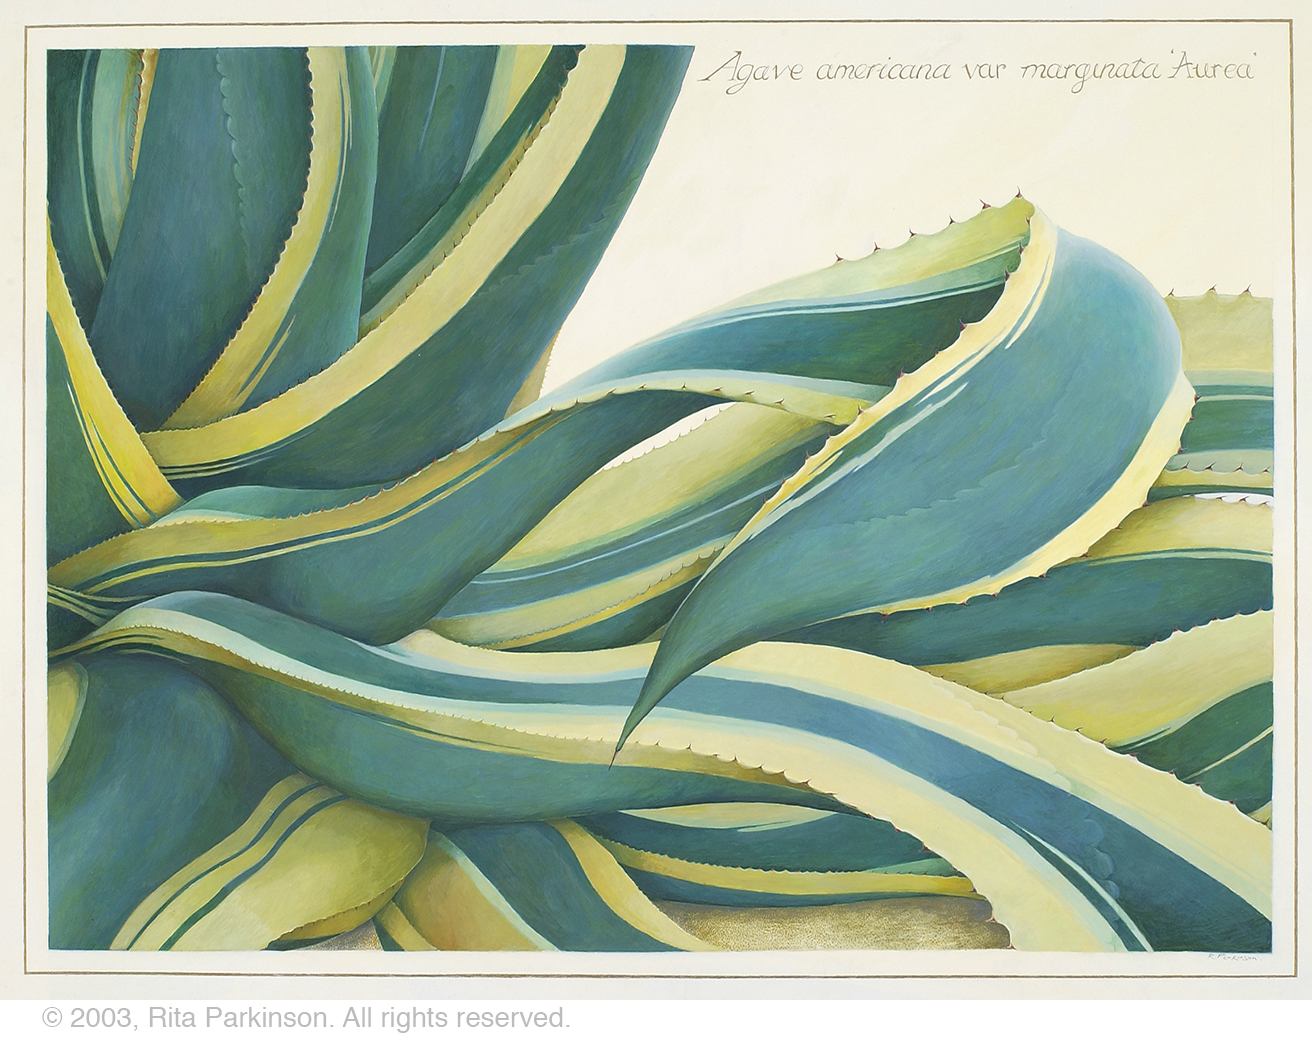 Parkinson, Rita | Catalogue the Exhibition of Botanical & Illustration